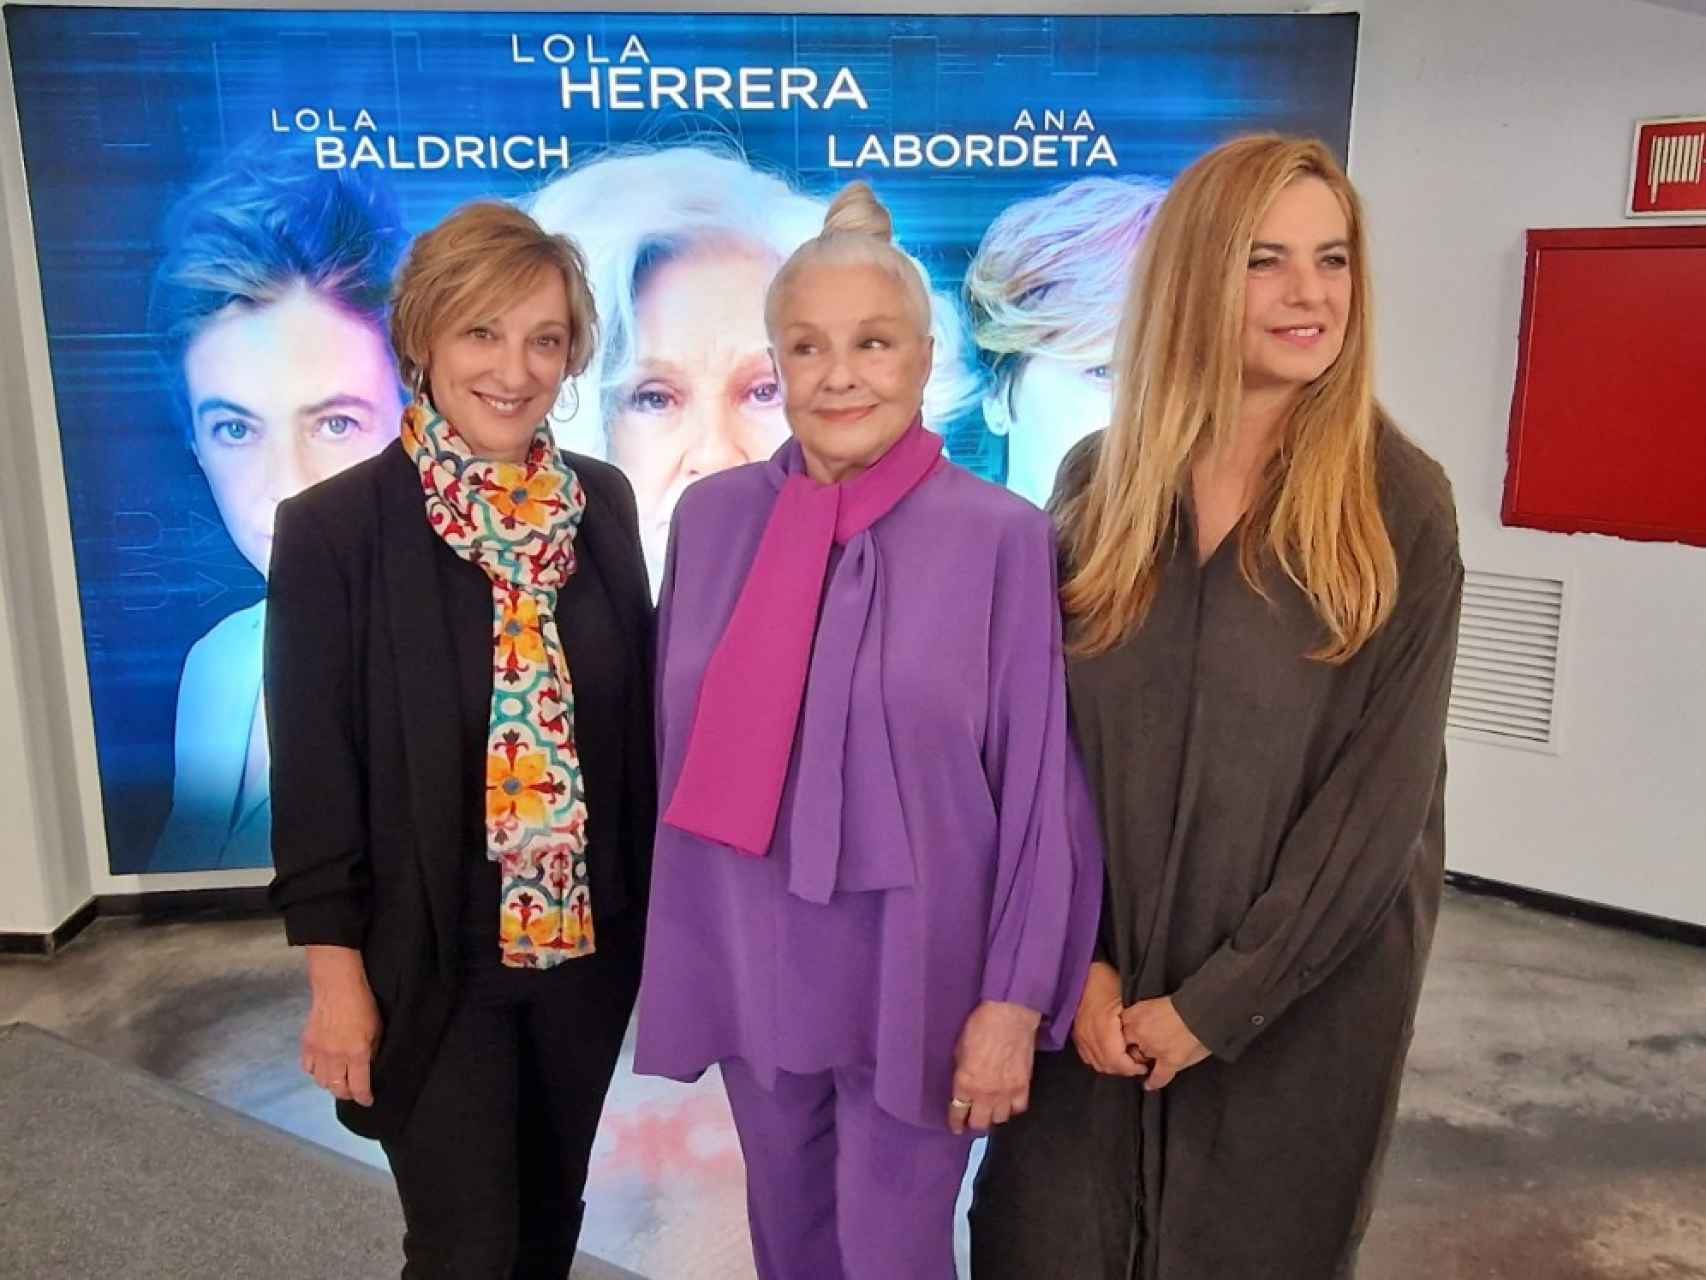 Lola Herrera, Ana Labordeta y Lola Baldrich.